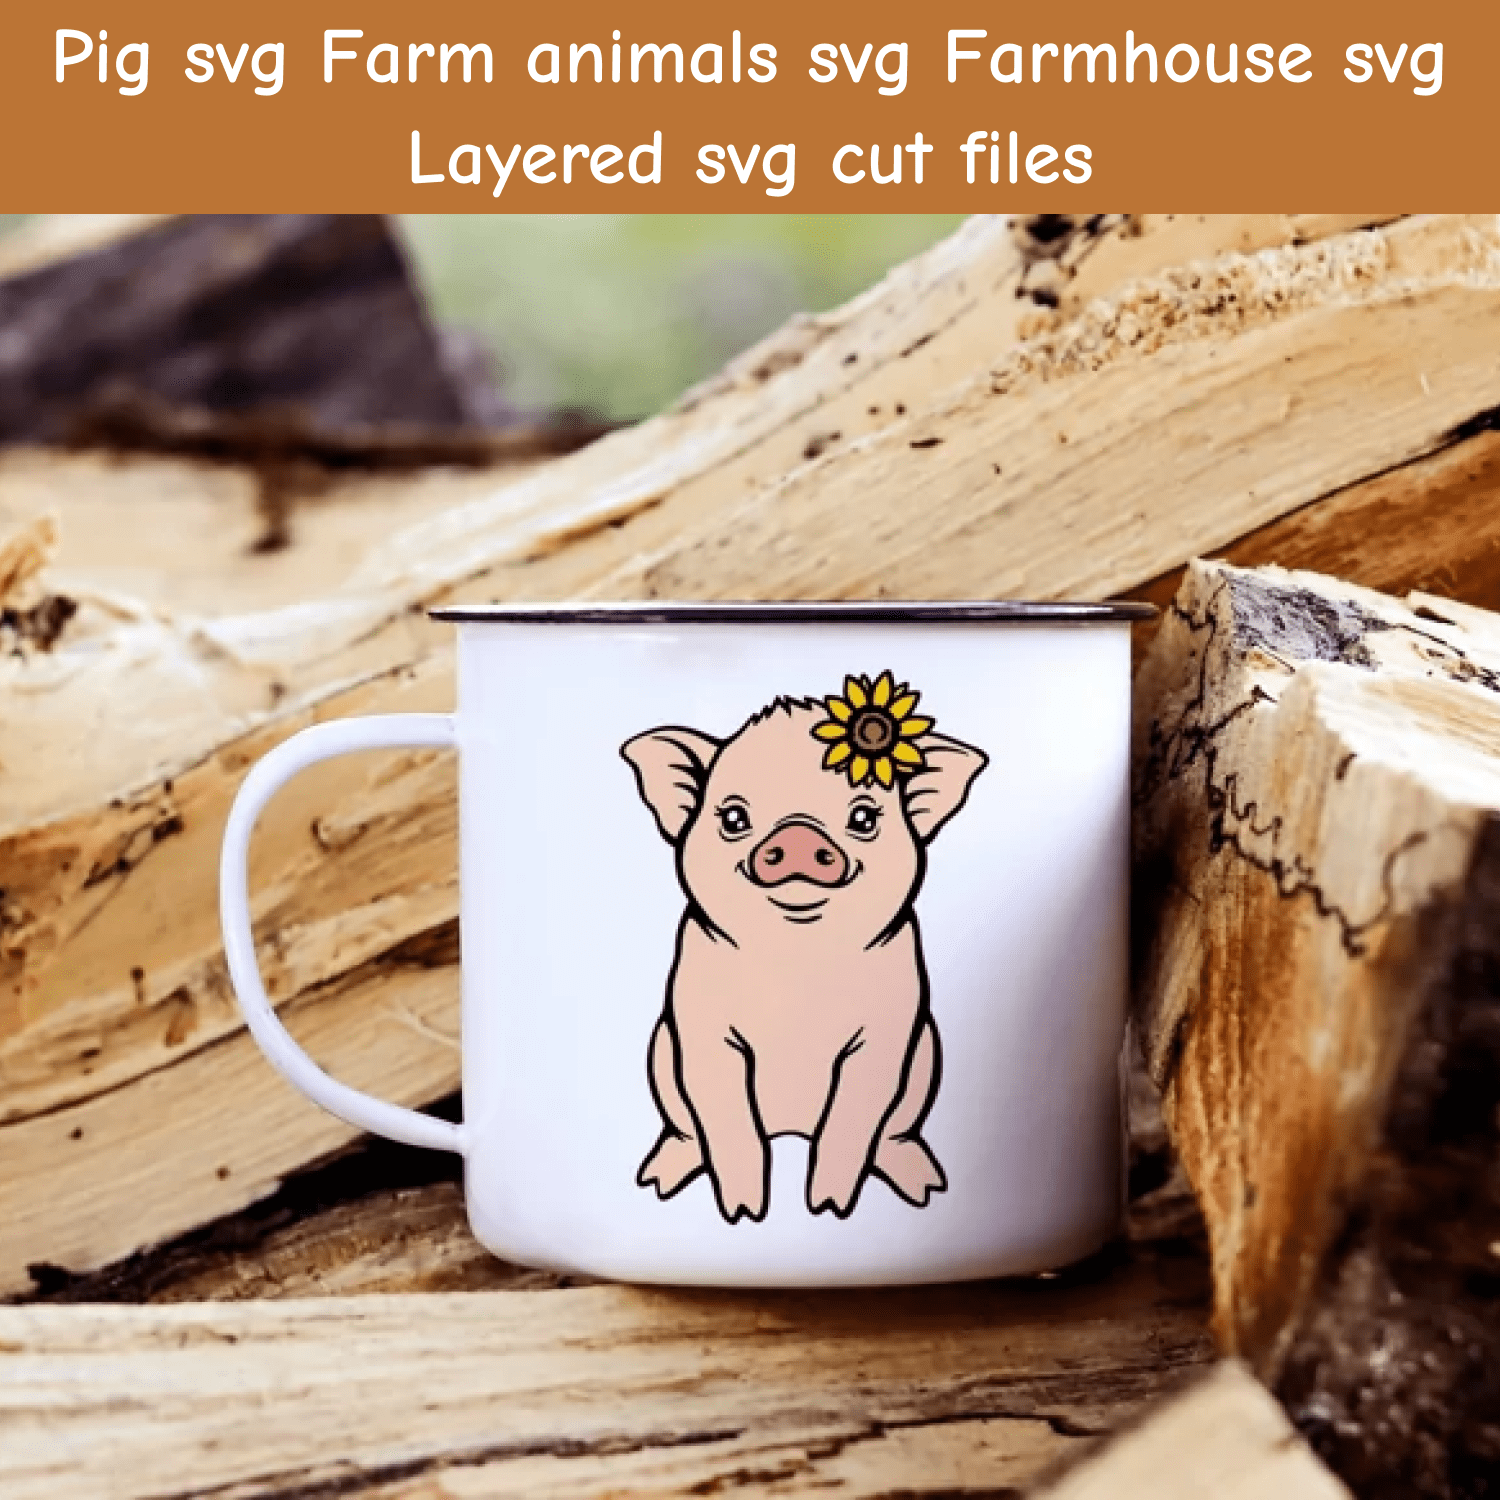 Pig svg Farm animals svg Farmhouse svg Layered svg cut files.